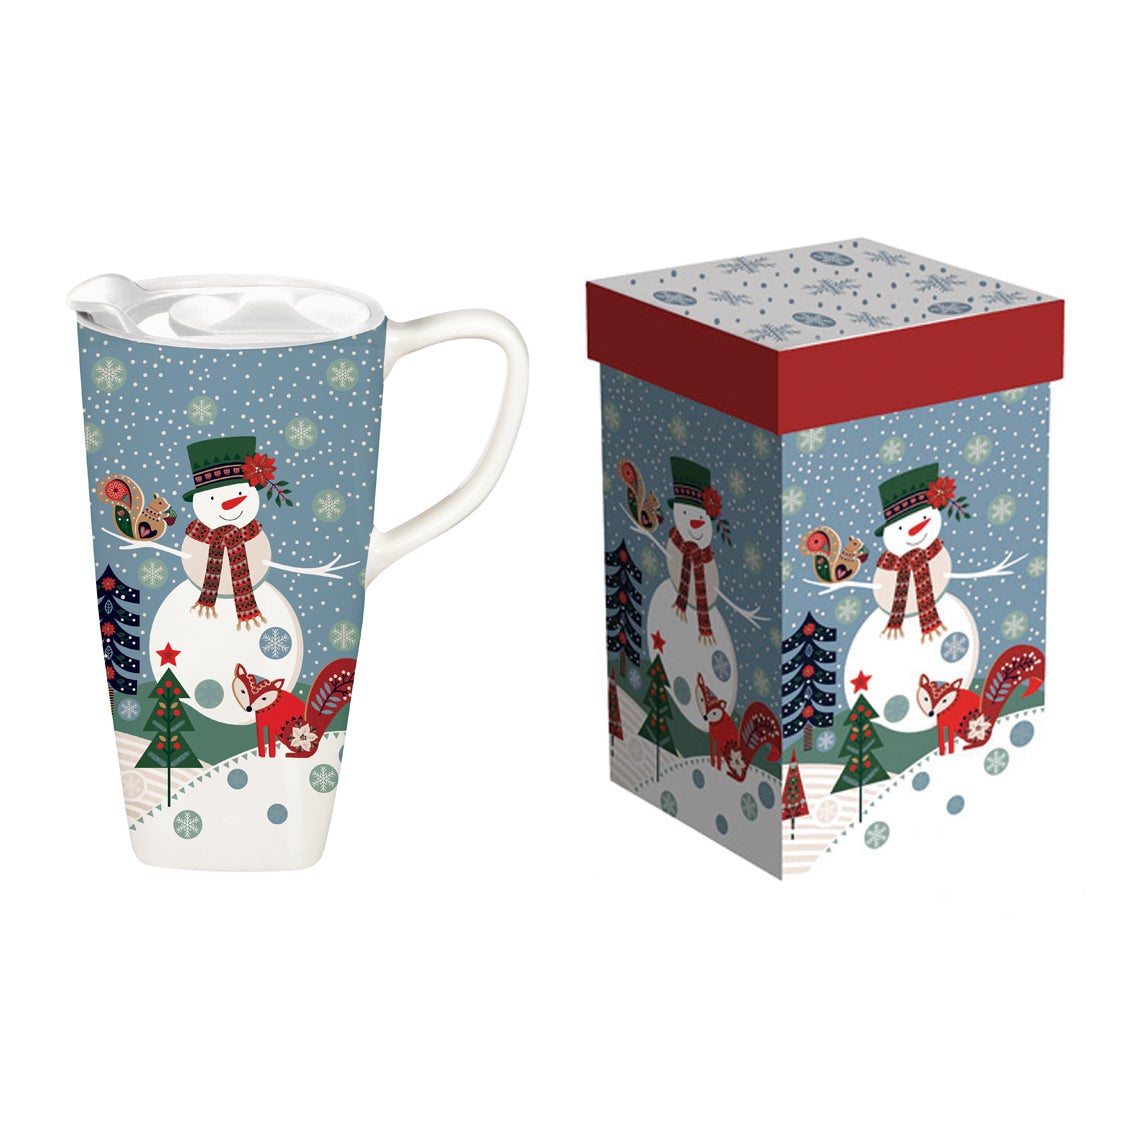 Ceramic On the Go Travel Cup, 17 oz., w/ Box, Snowman Print